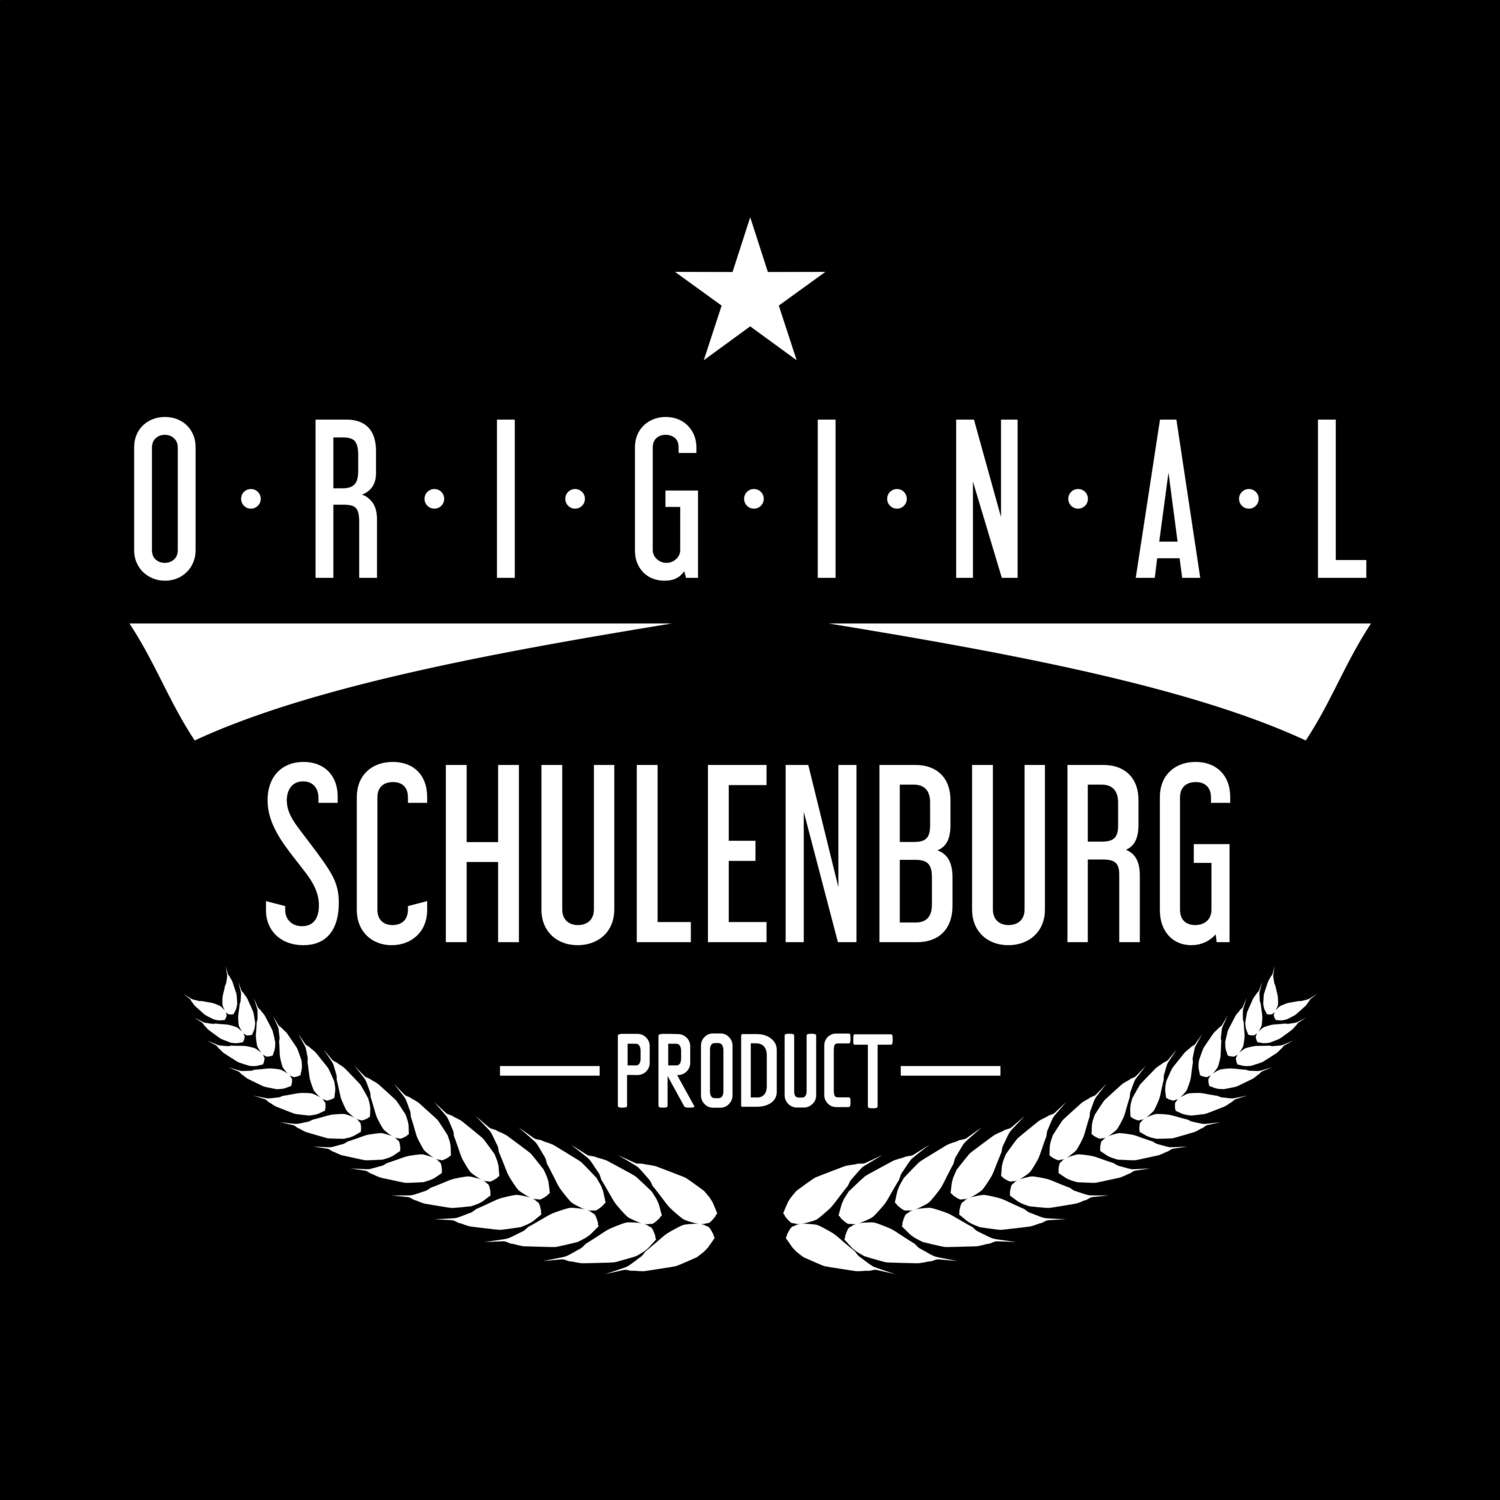 Schulenburg T-Shirt »Original Product«